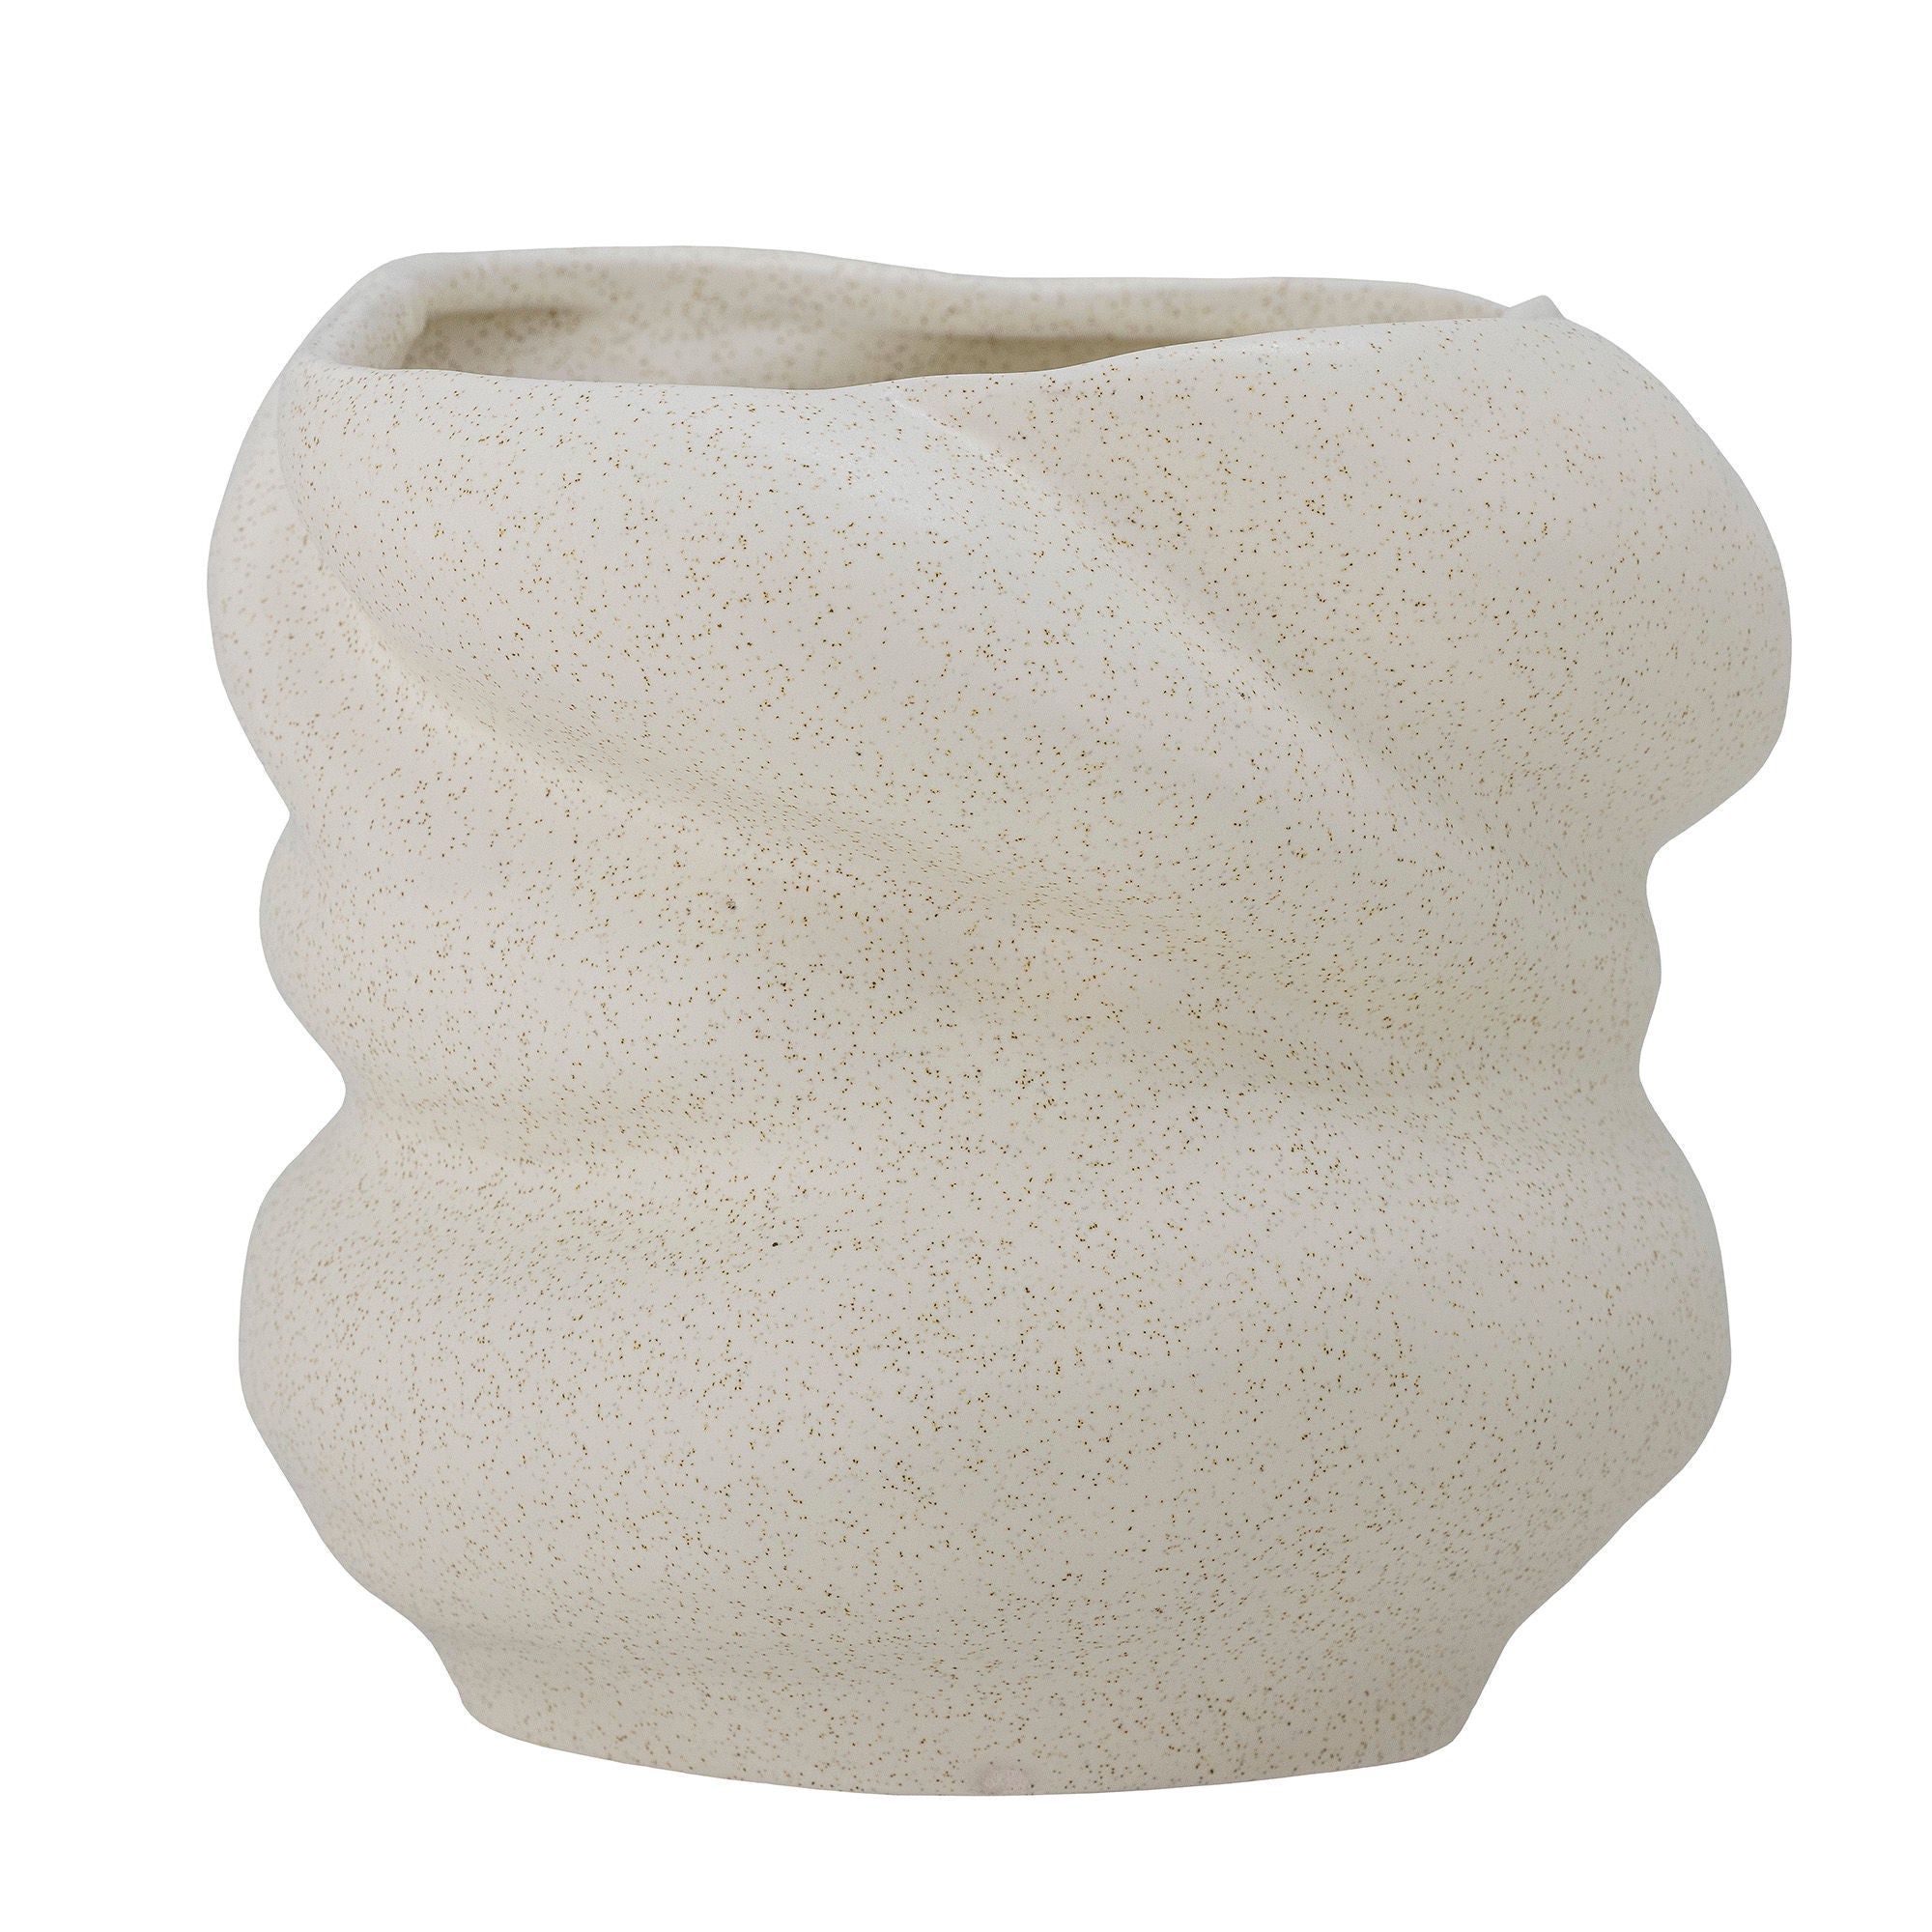 Bloomingville Orana Flowerpot, White, Stoneware